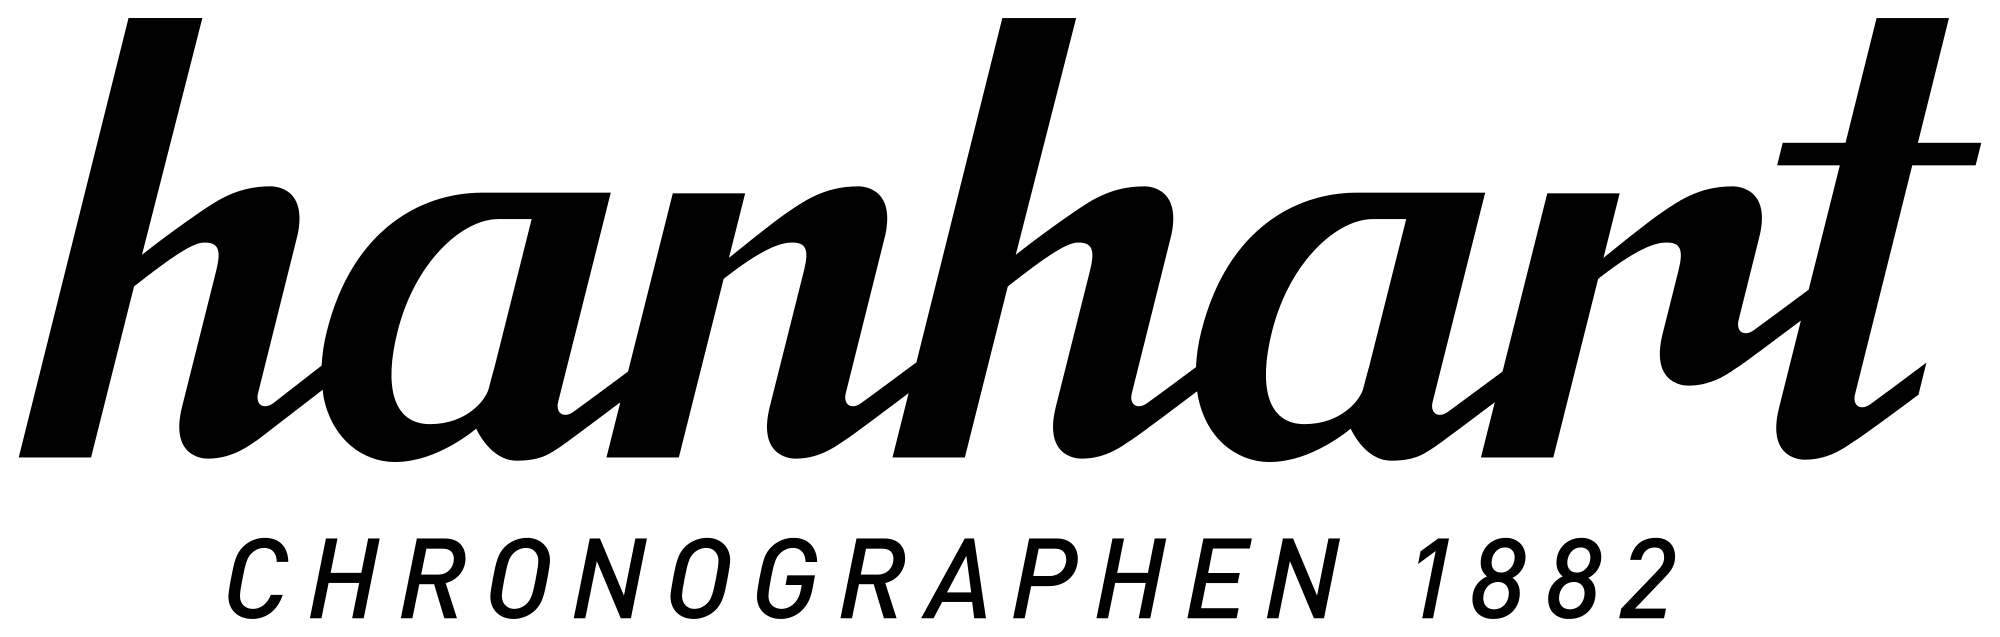 Hanhart logo